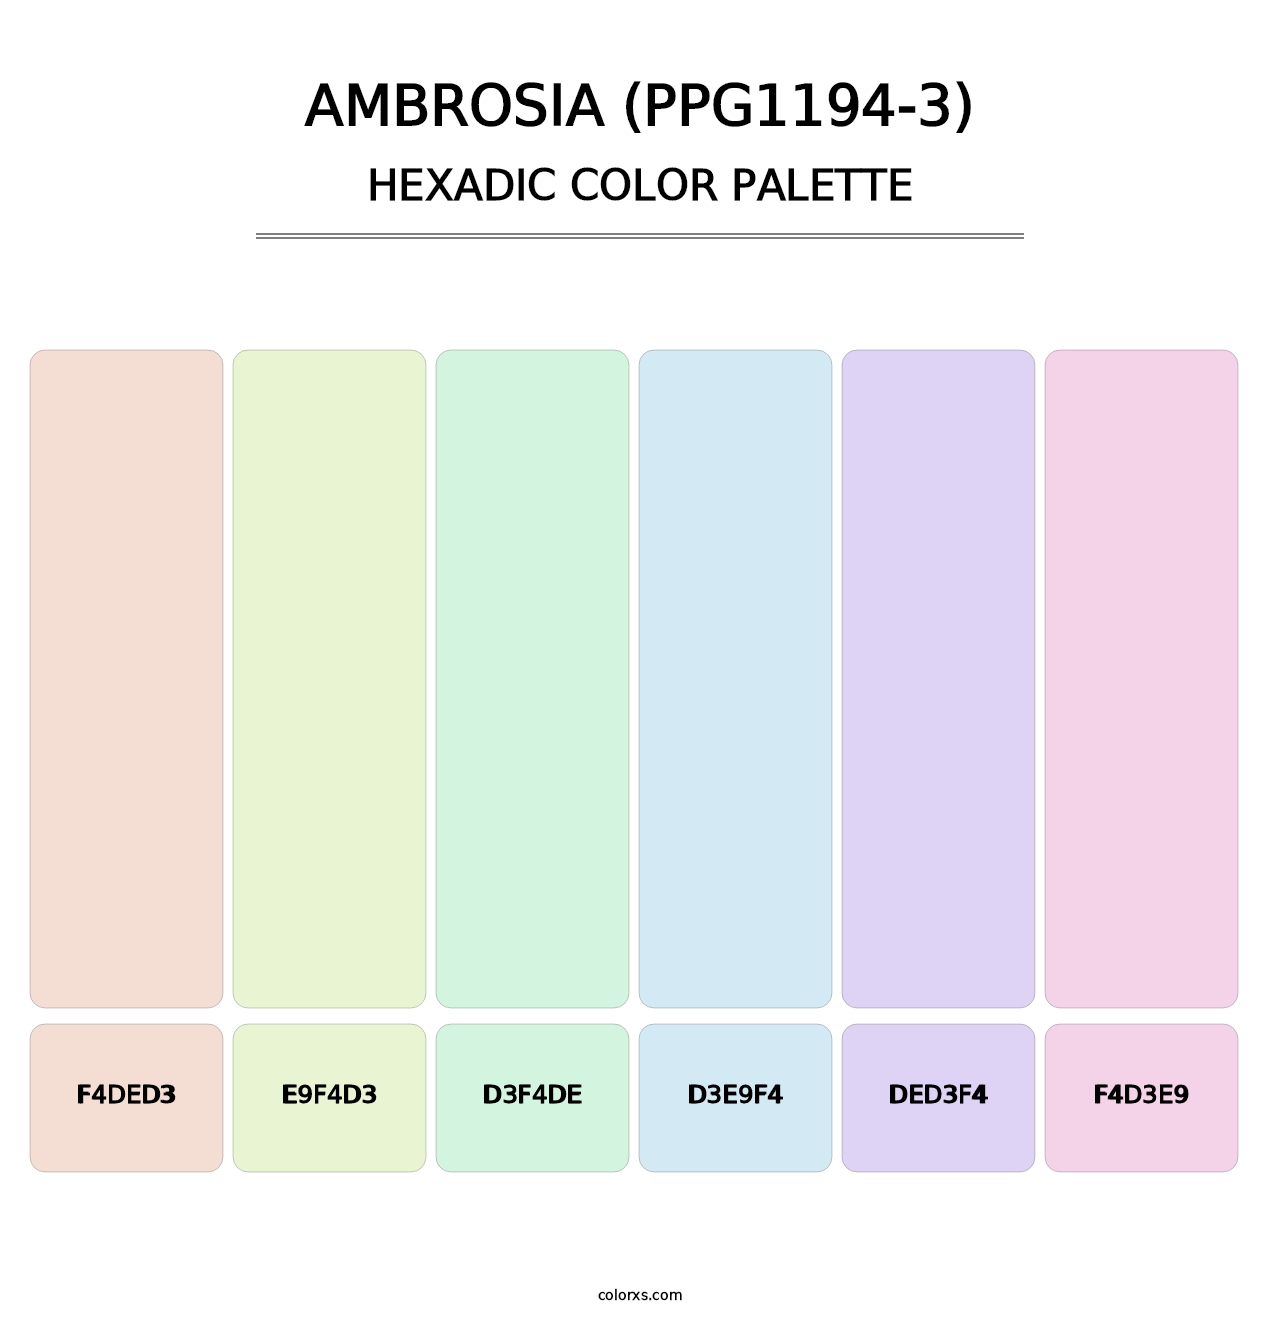 Ambrosia (PPG1194-3) - Hexadic Color Palette